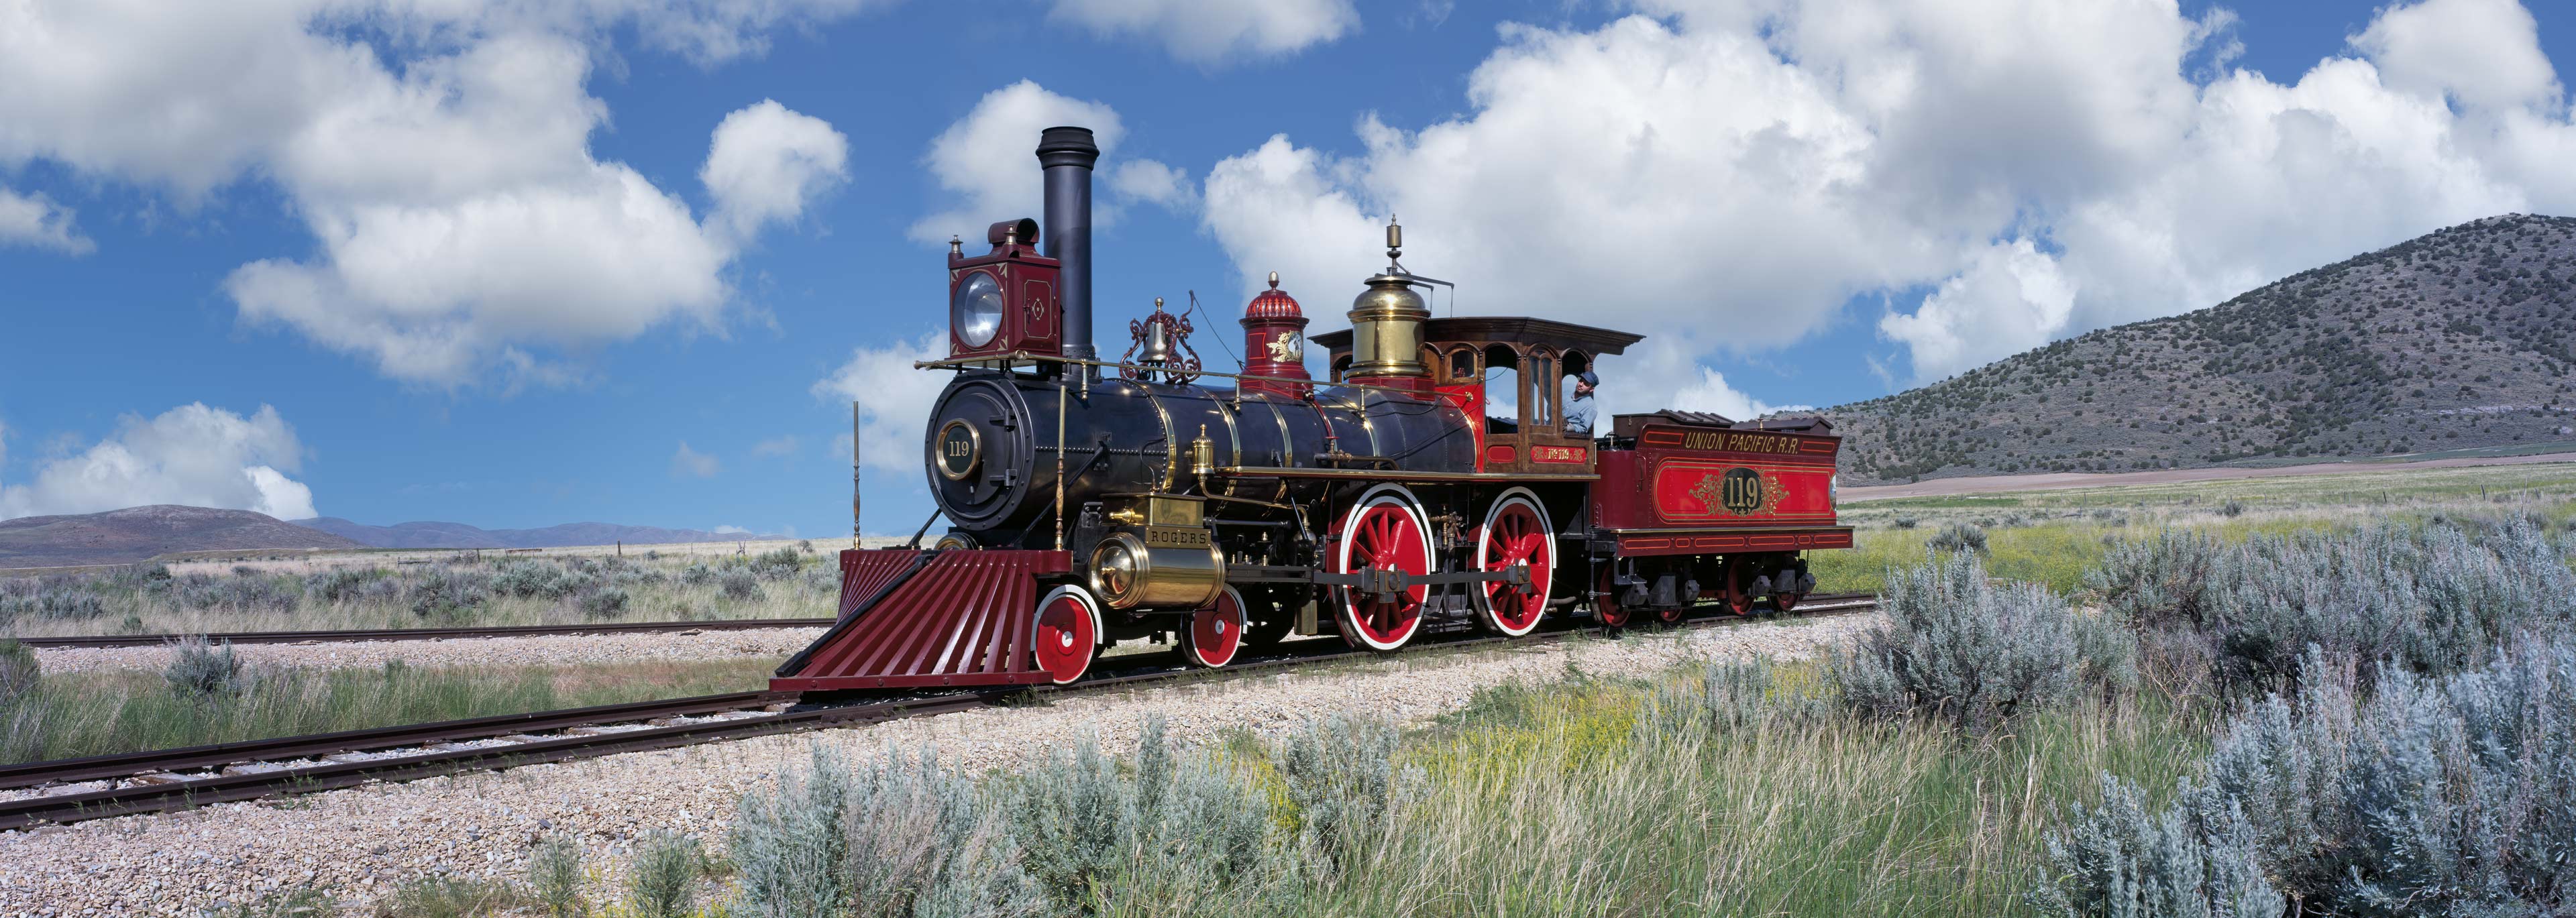 Locomotive 119, Golden Spike National Monument, Utah, USA